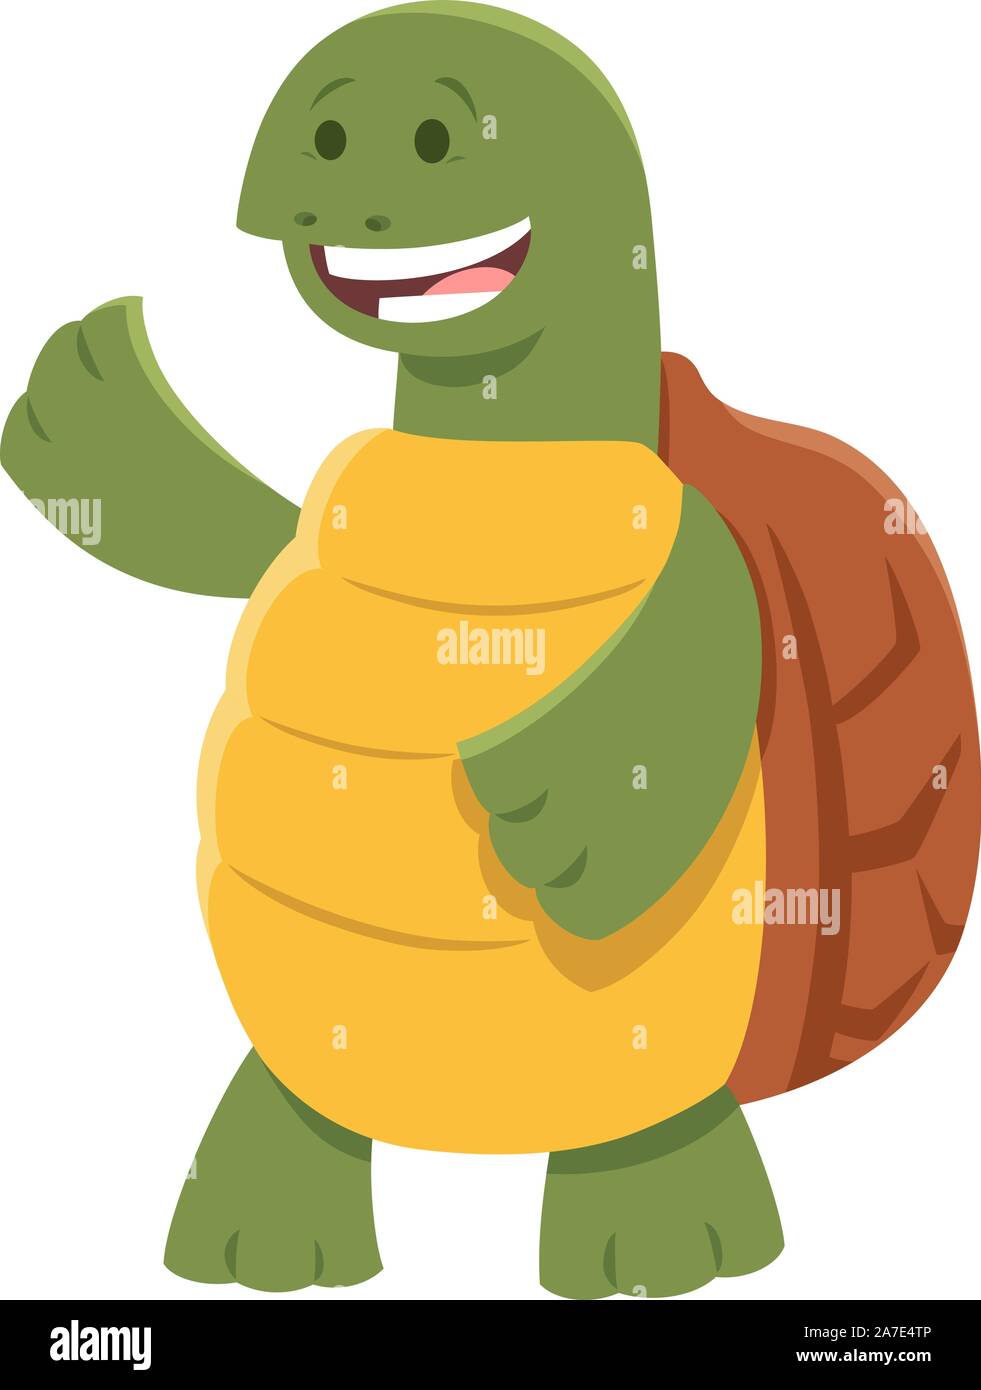 Cartoon Illustration of Funny Turtle or Tortoise Comic Animal Character Stock Vector